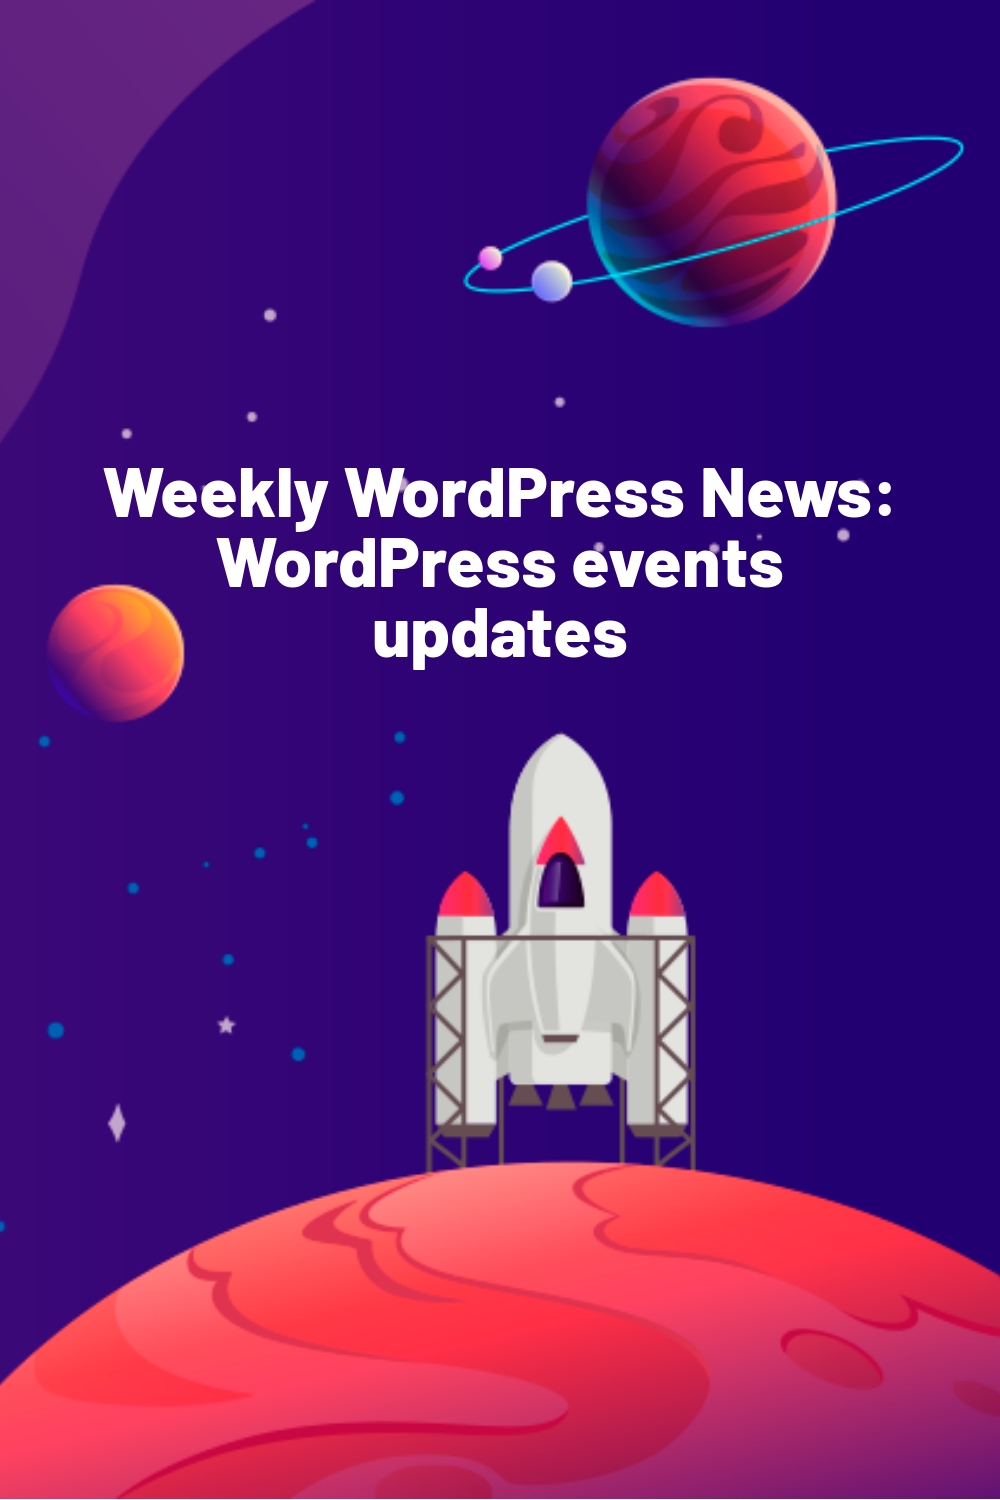 Weekly WordPress News: WordPress events updates